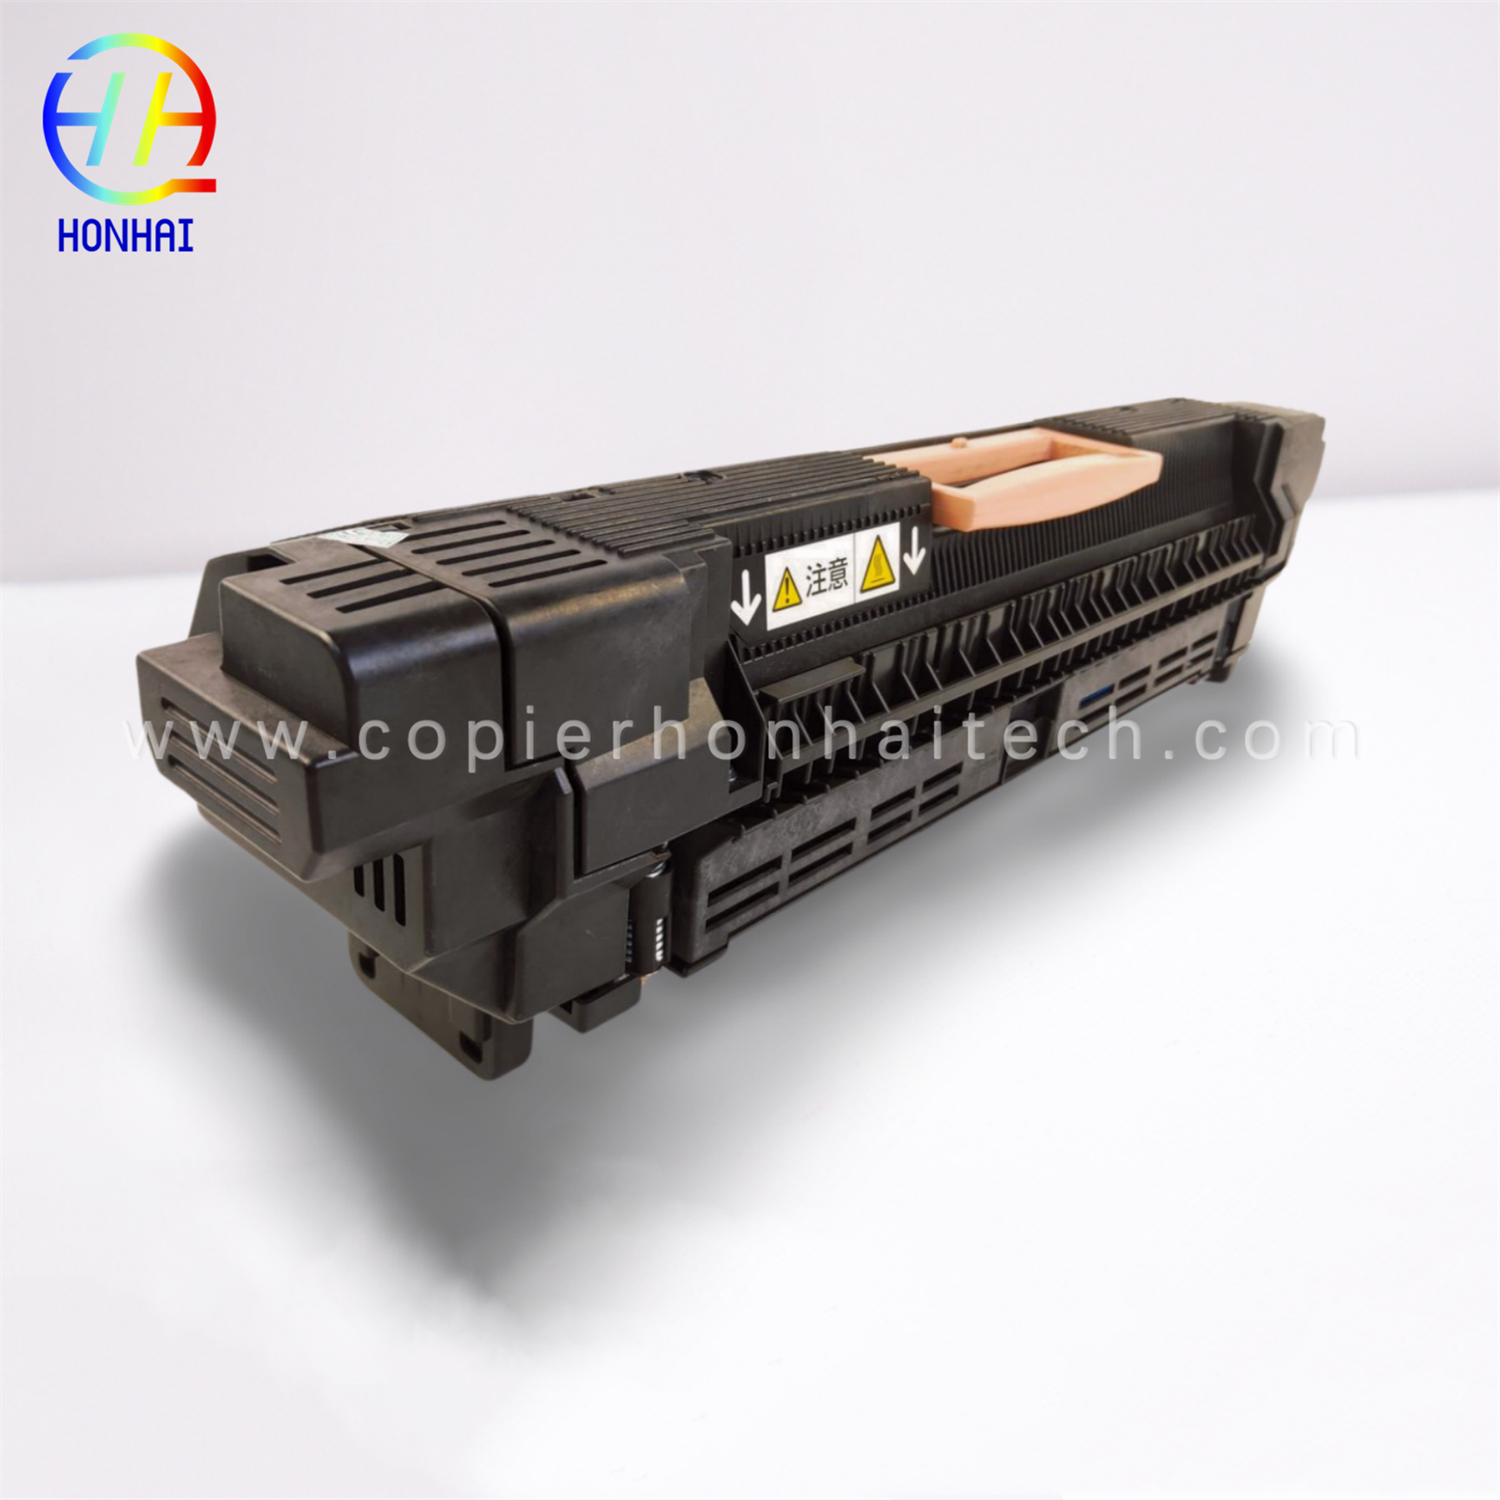 https://www.copierhonhaitech.com/fuser-cartridge-assy-220v-for-xerox-color-550-560-570-c60-c70-008r13065-641s00649-product/